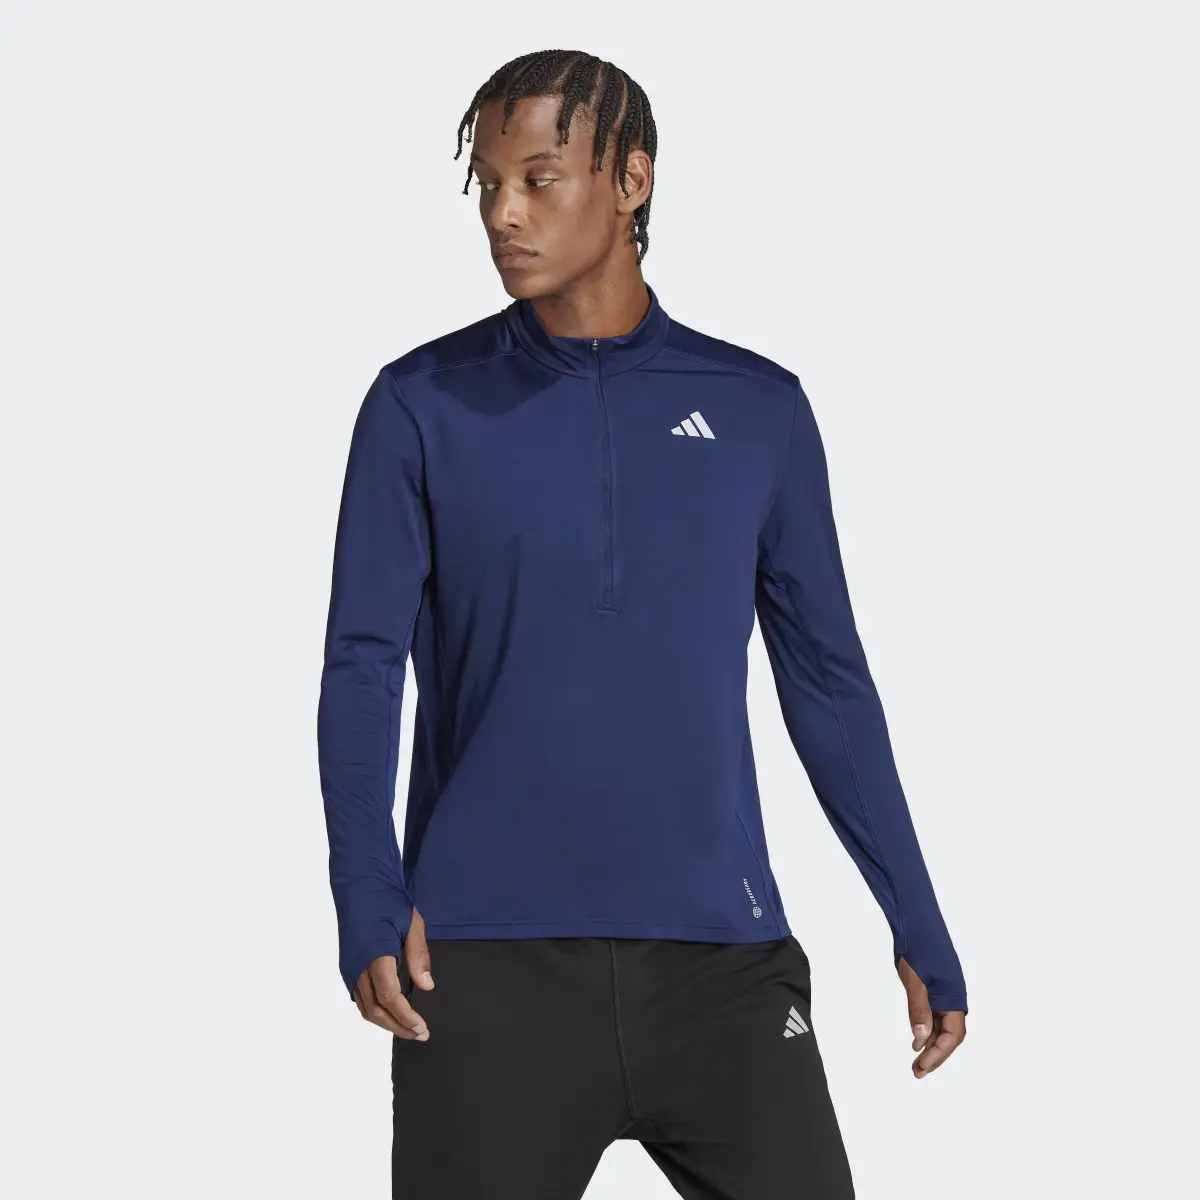 Adidas Own the Run 1/2 Zip Long-Sleeve Top. 2